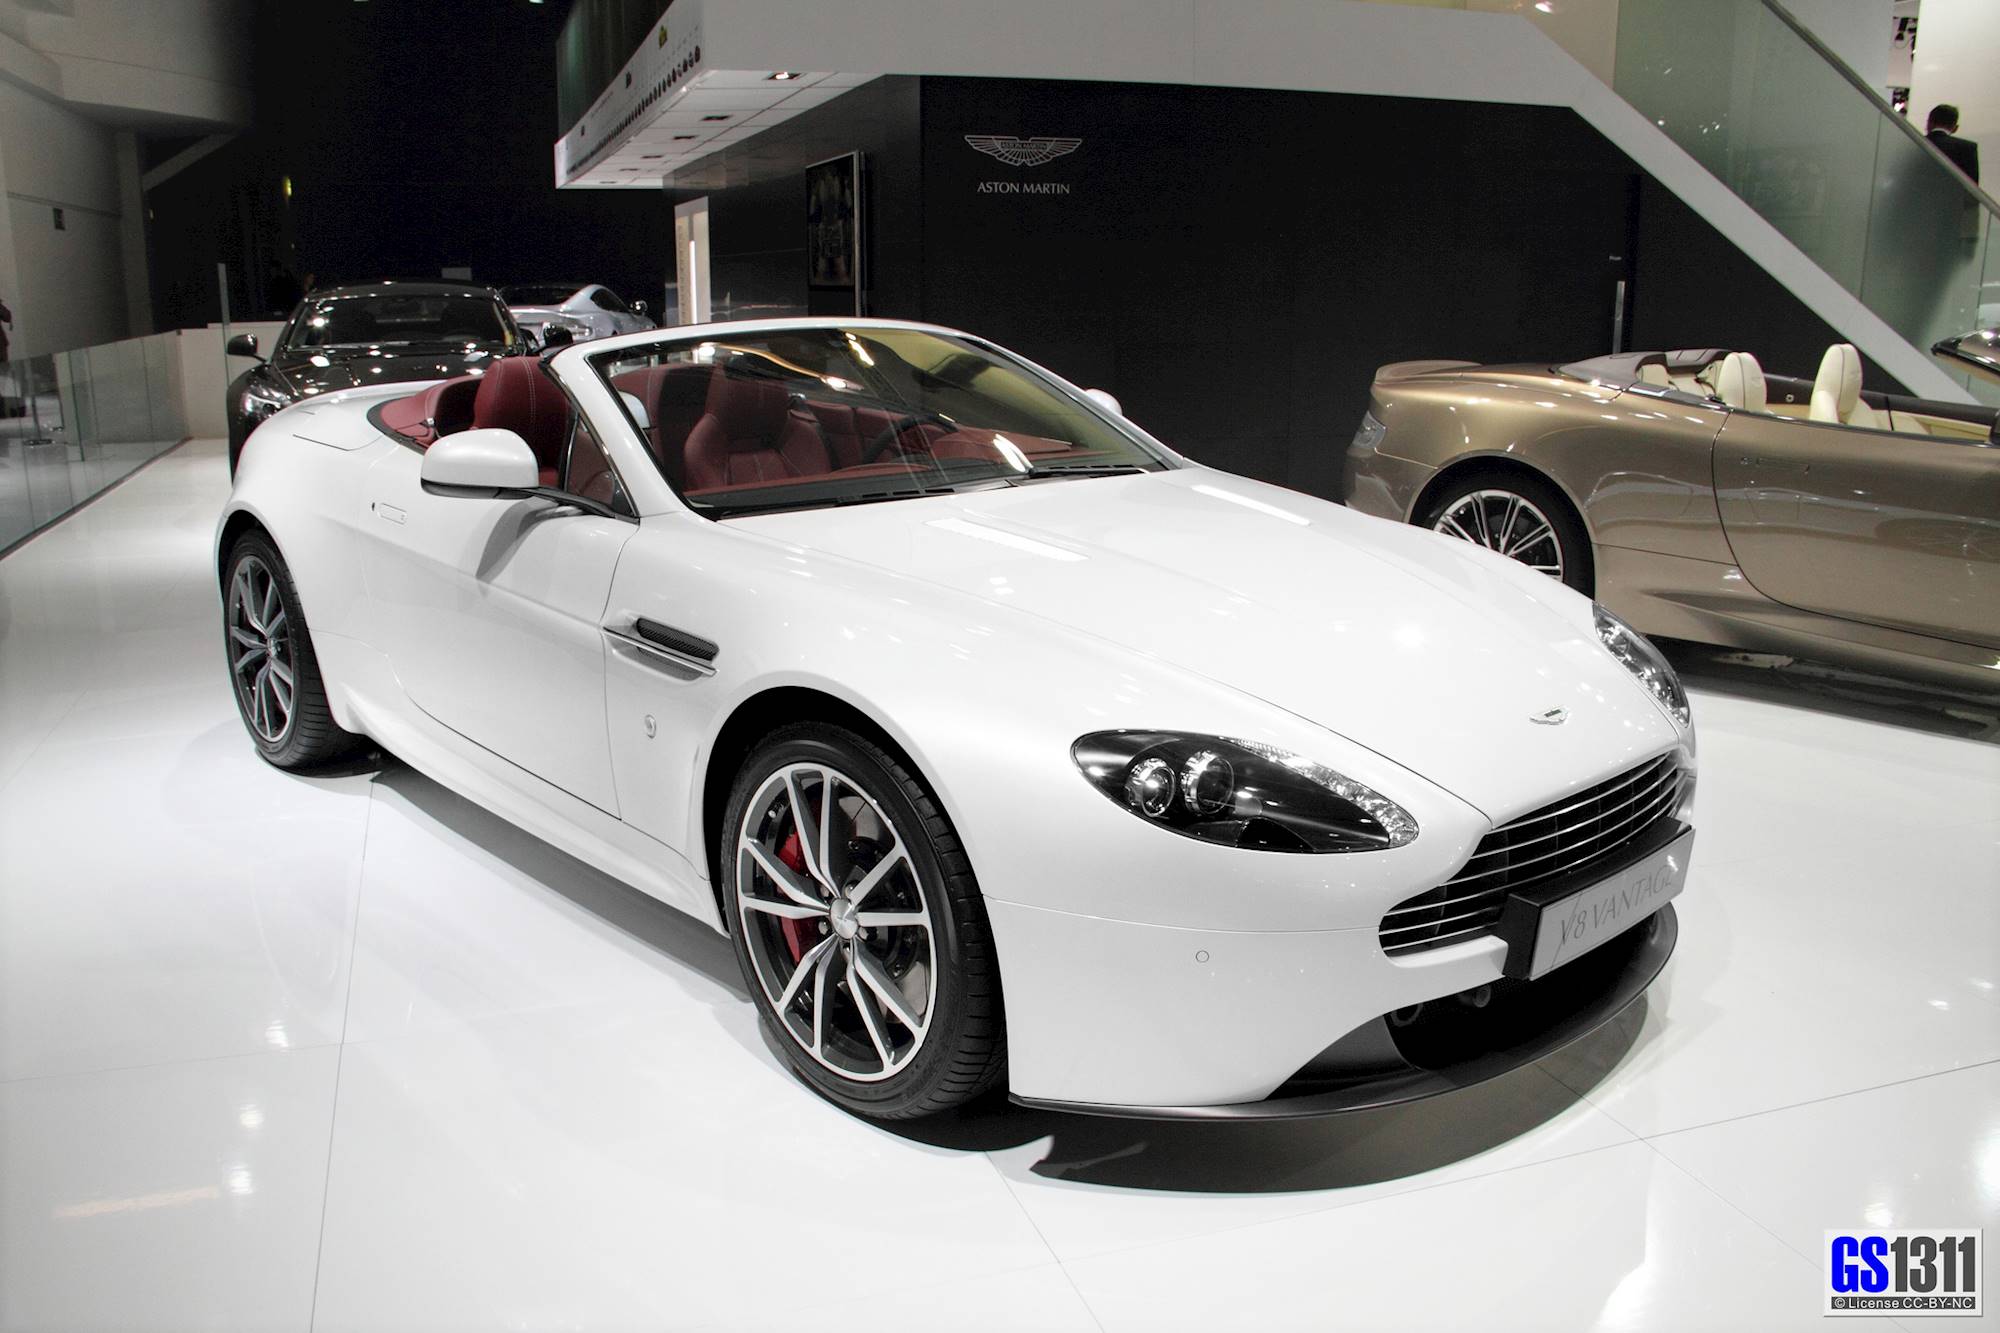 Машина за 3 миллиона рублей. 2006 Aston Martin v8 Vantage White. Машины за 4 миллиона. Машина за миллион рублей.